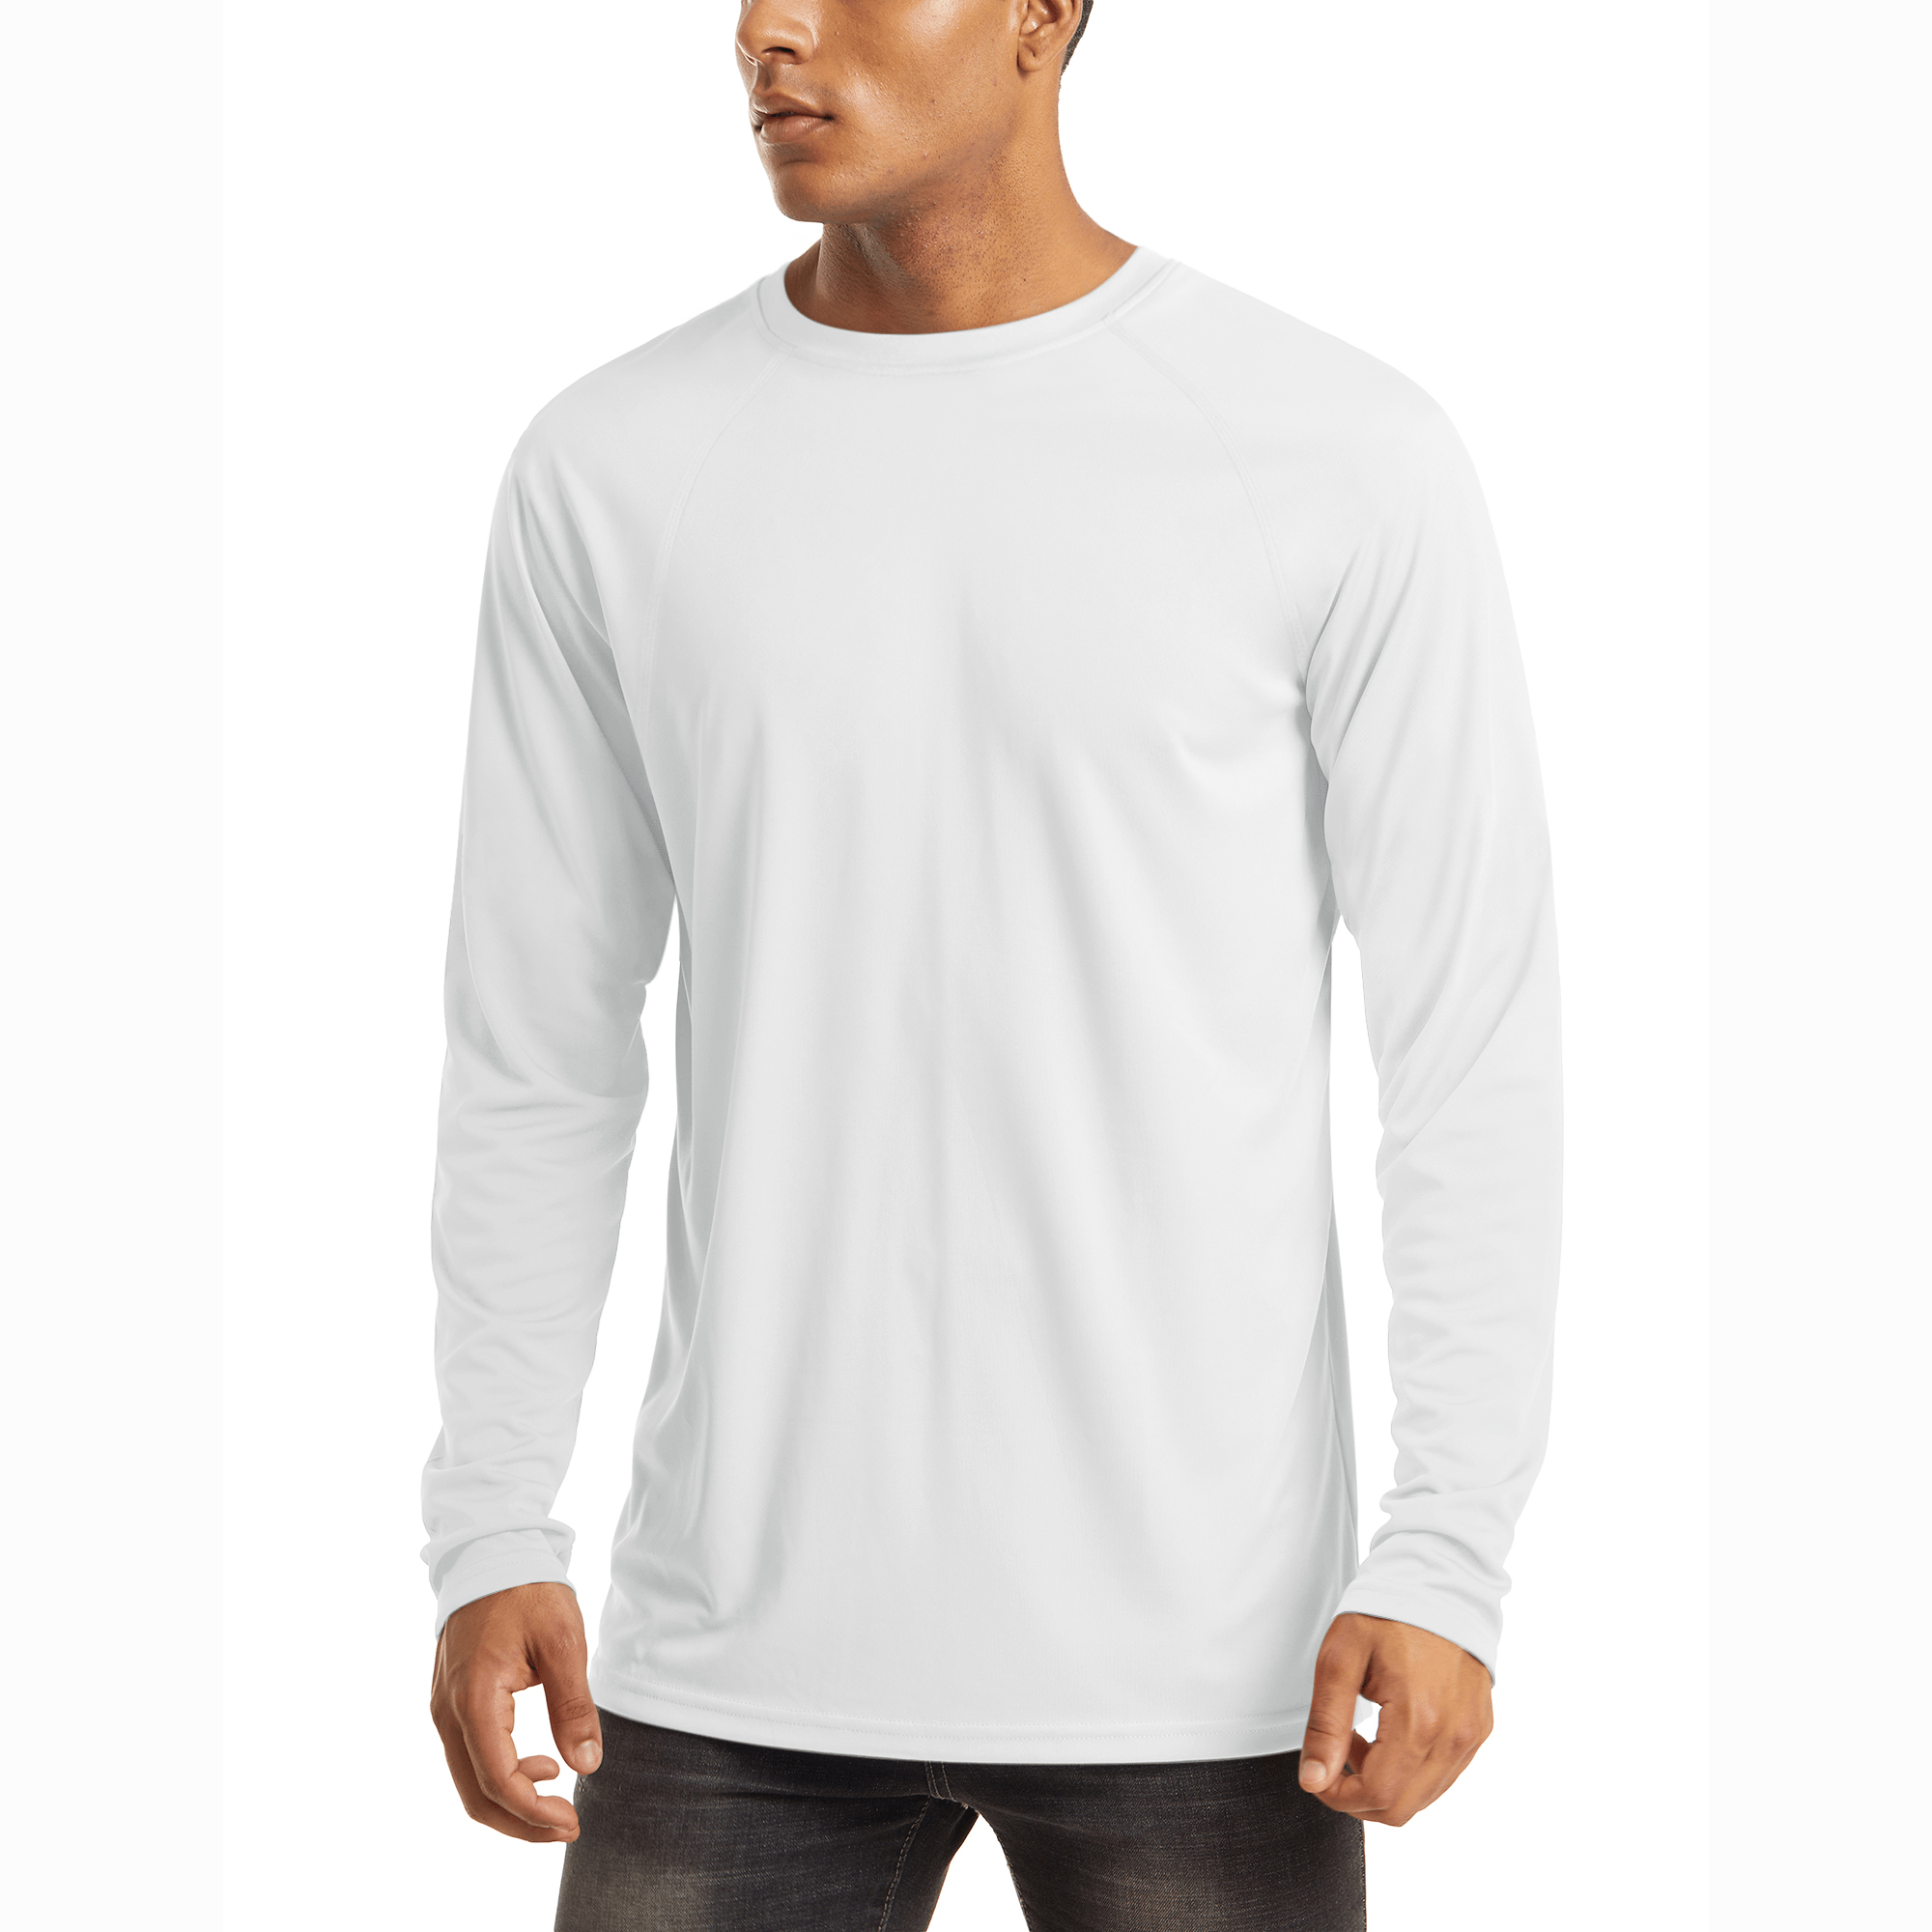 【Buy 4 Get 4th Free】Men's Long Sleeve Hooded Shirt UPF 50+ Athletic Shirt